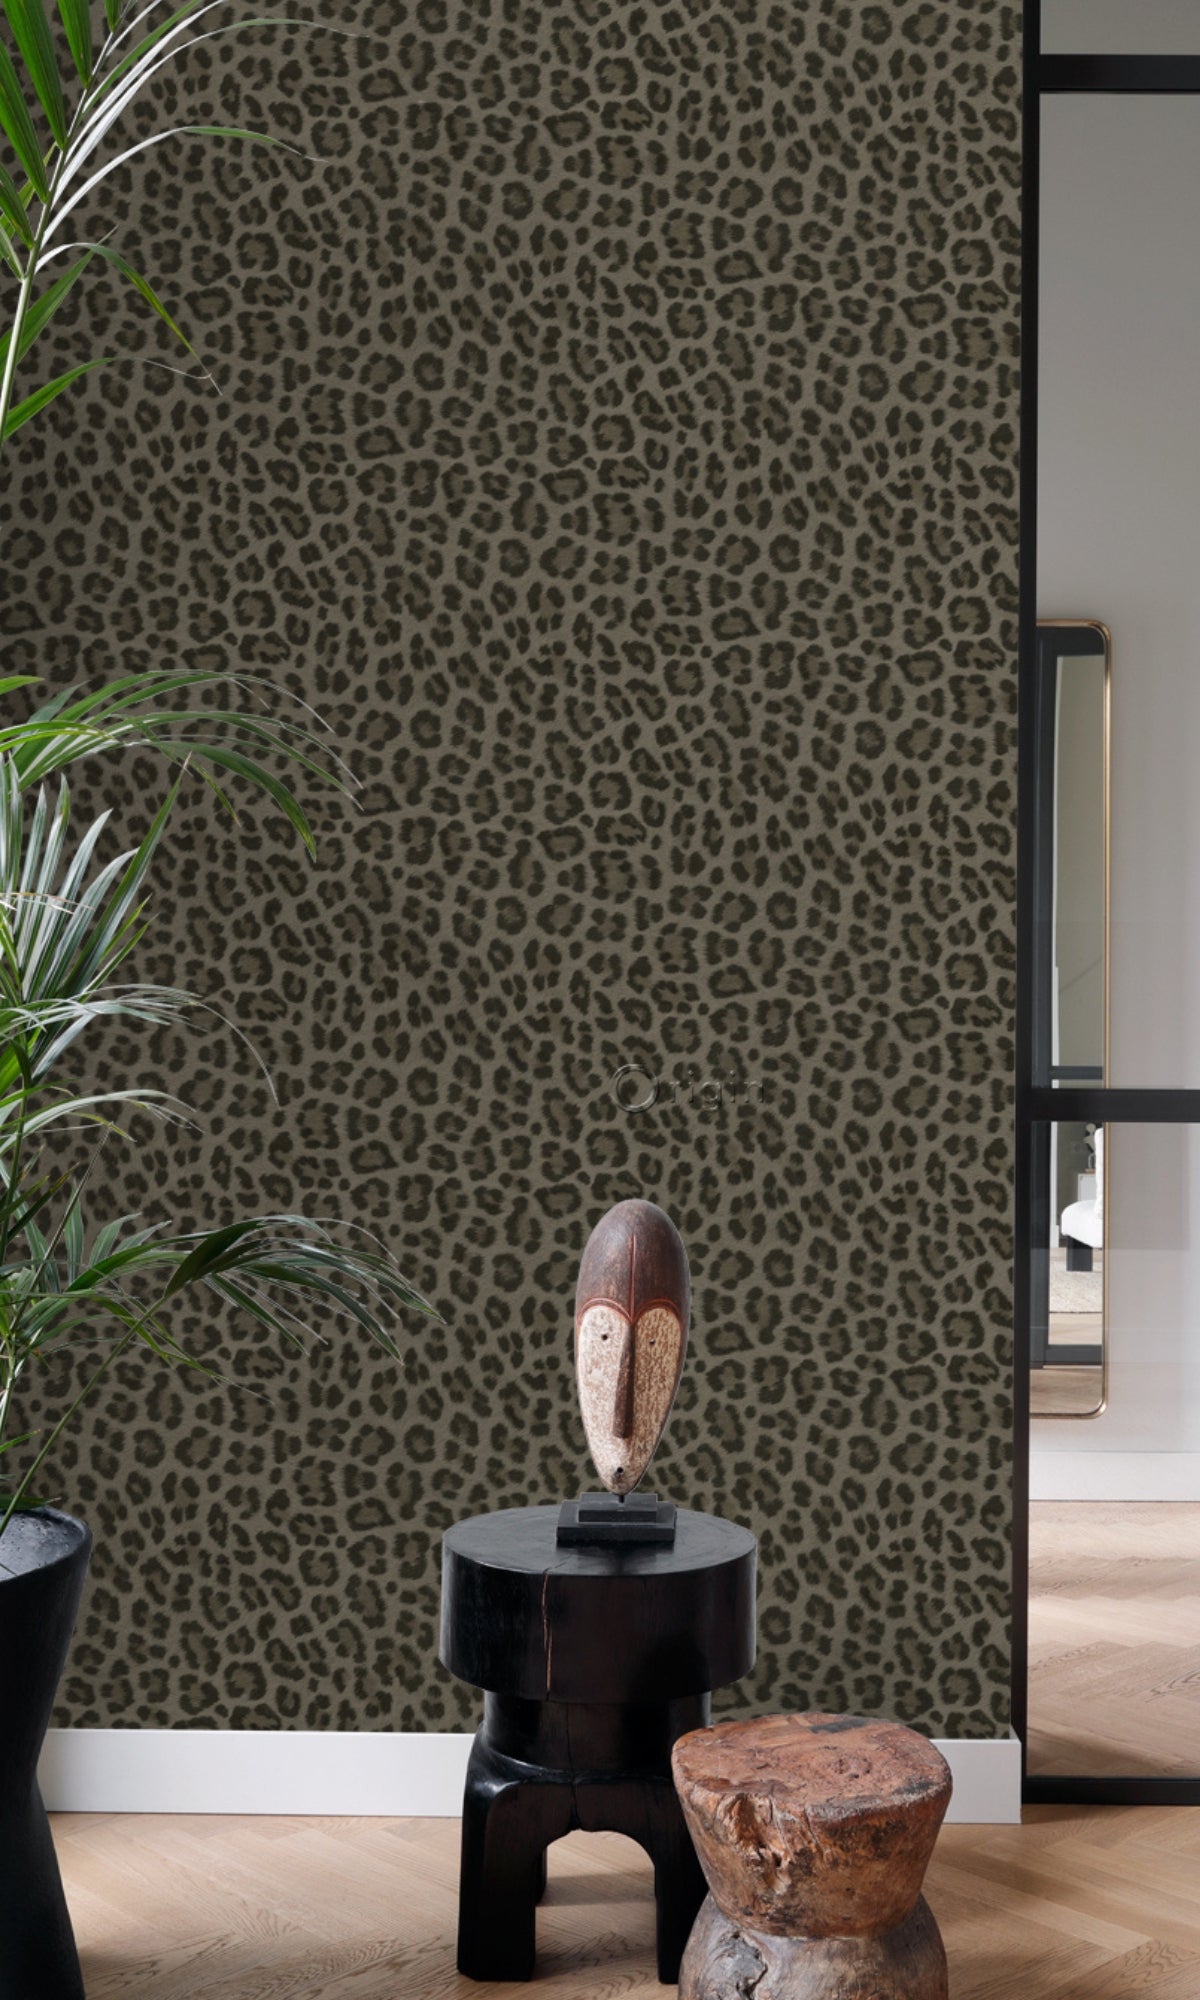 Brown Leopard Animal Print Wallpaper R8323